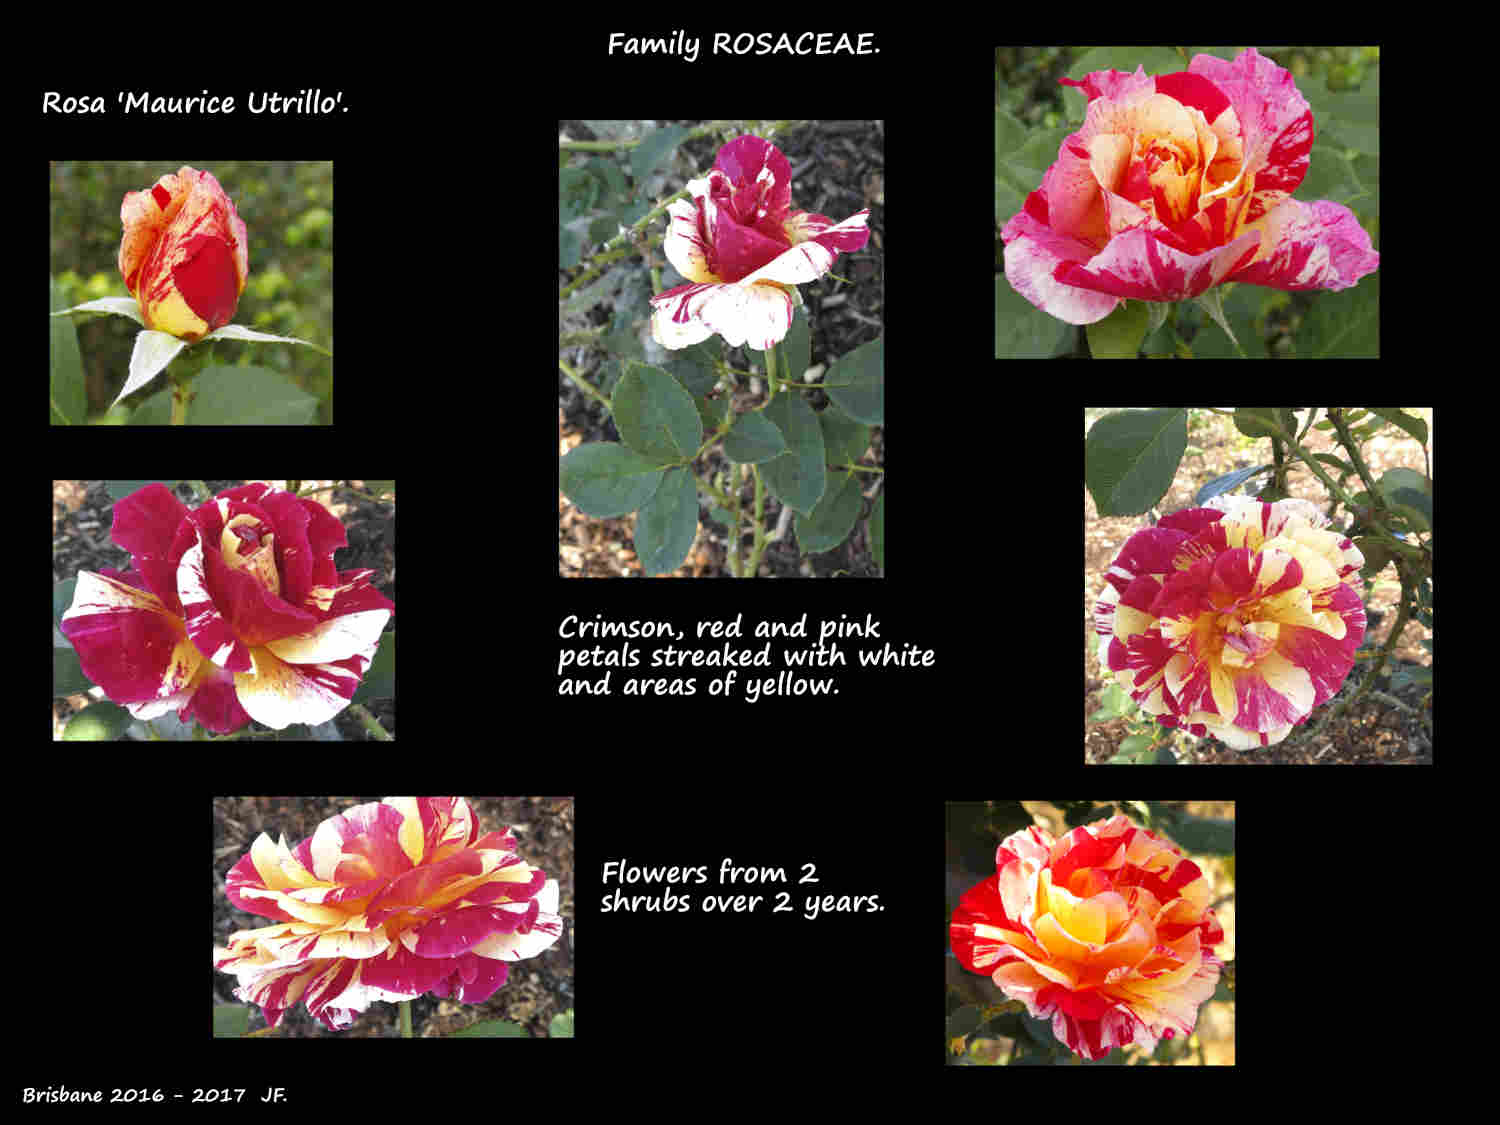 1 Rosa 'Maurice Utrillo'